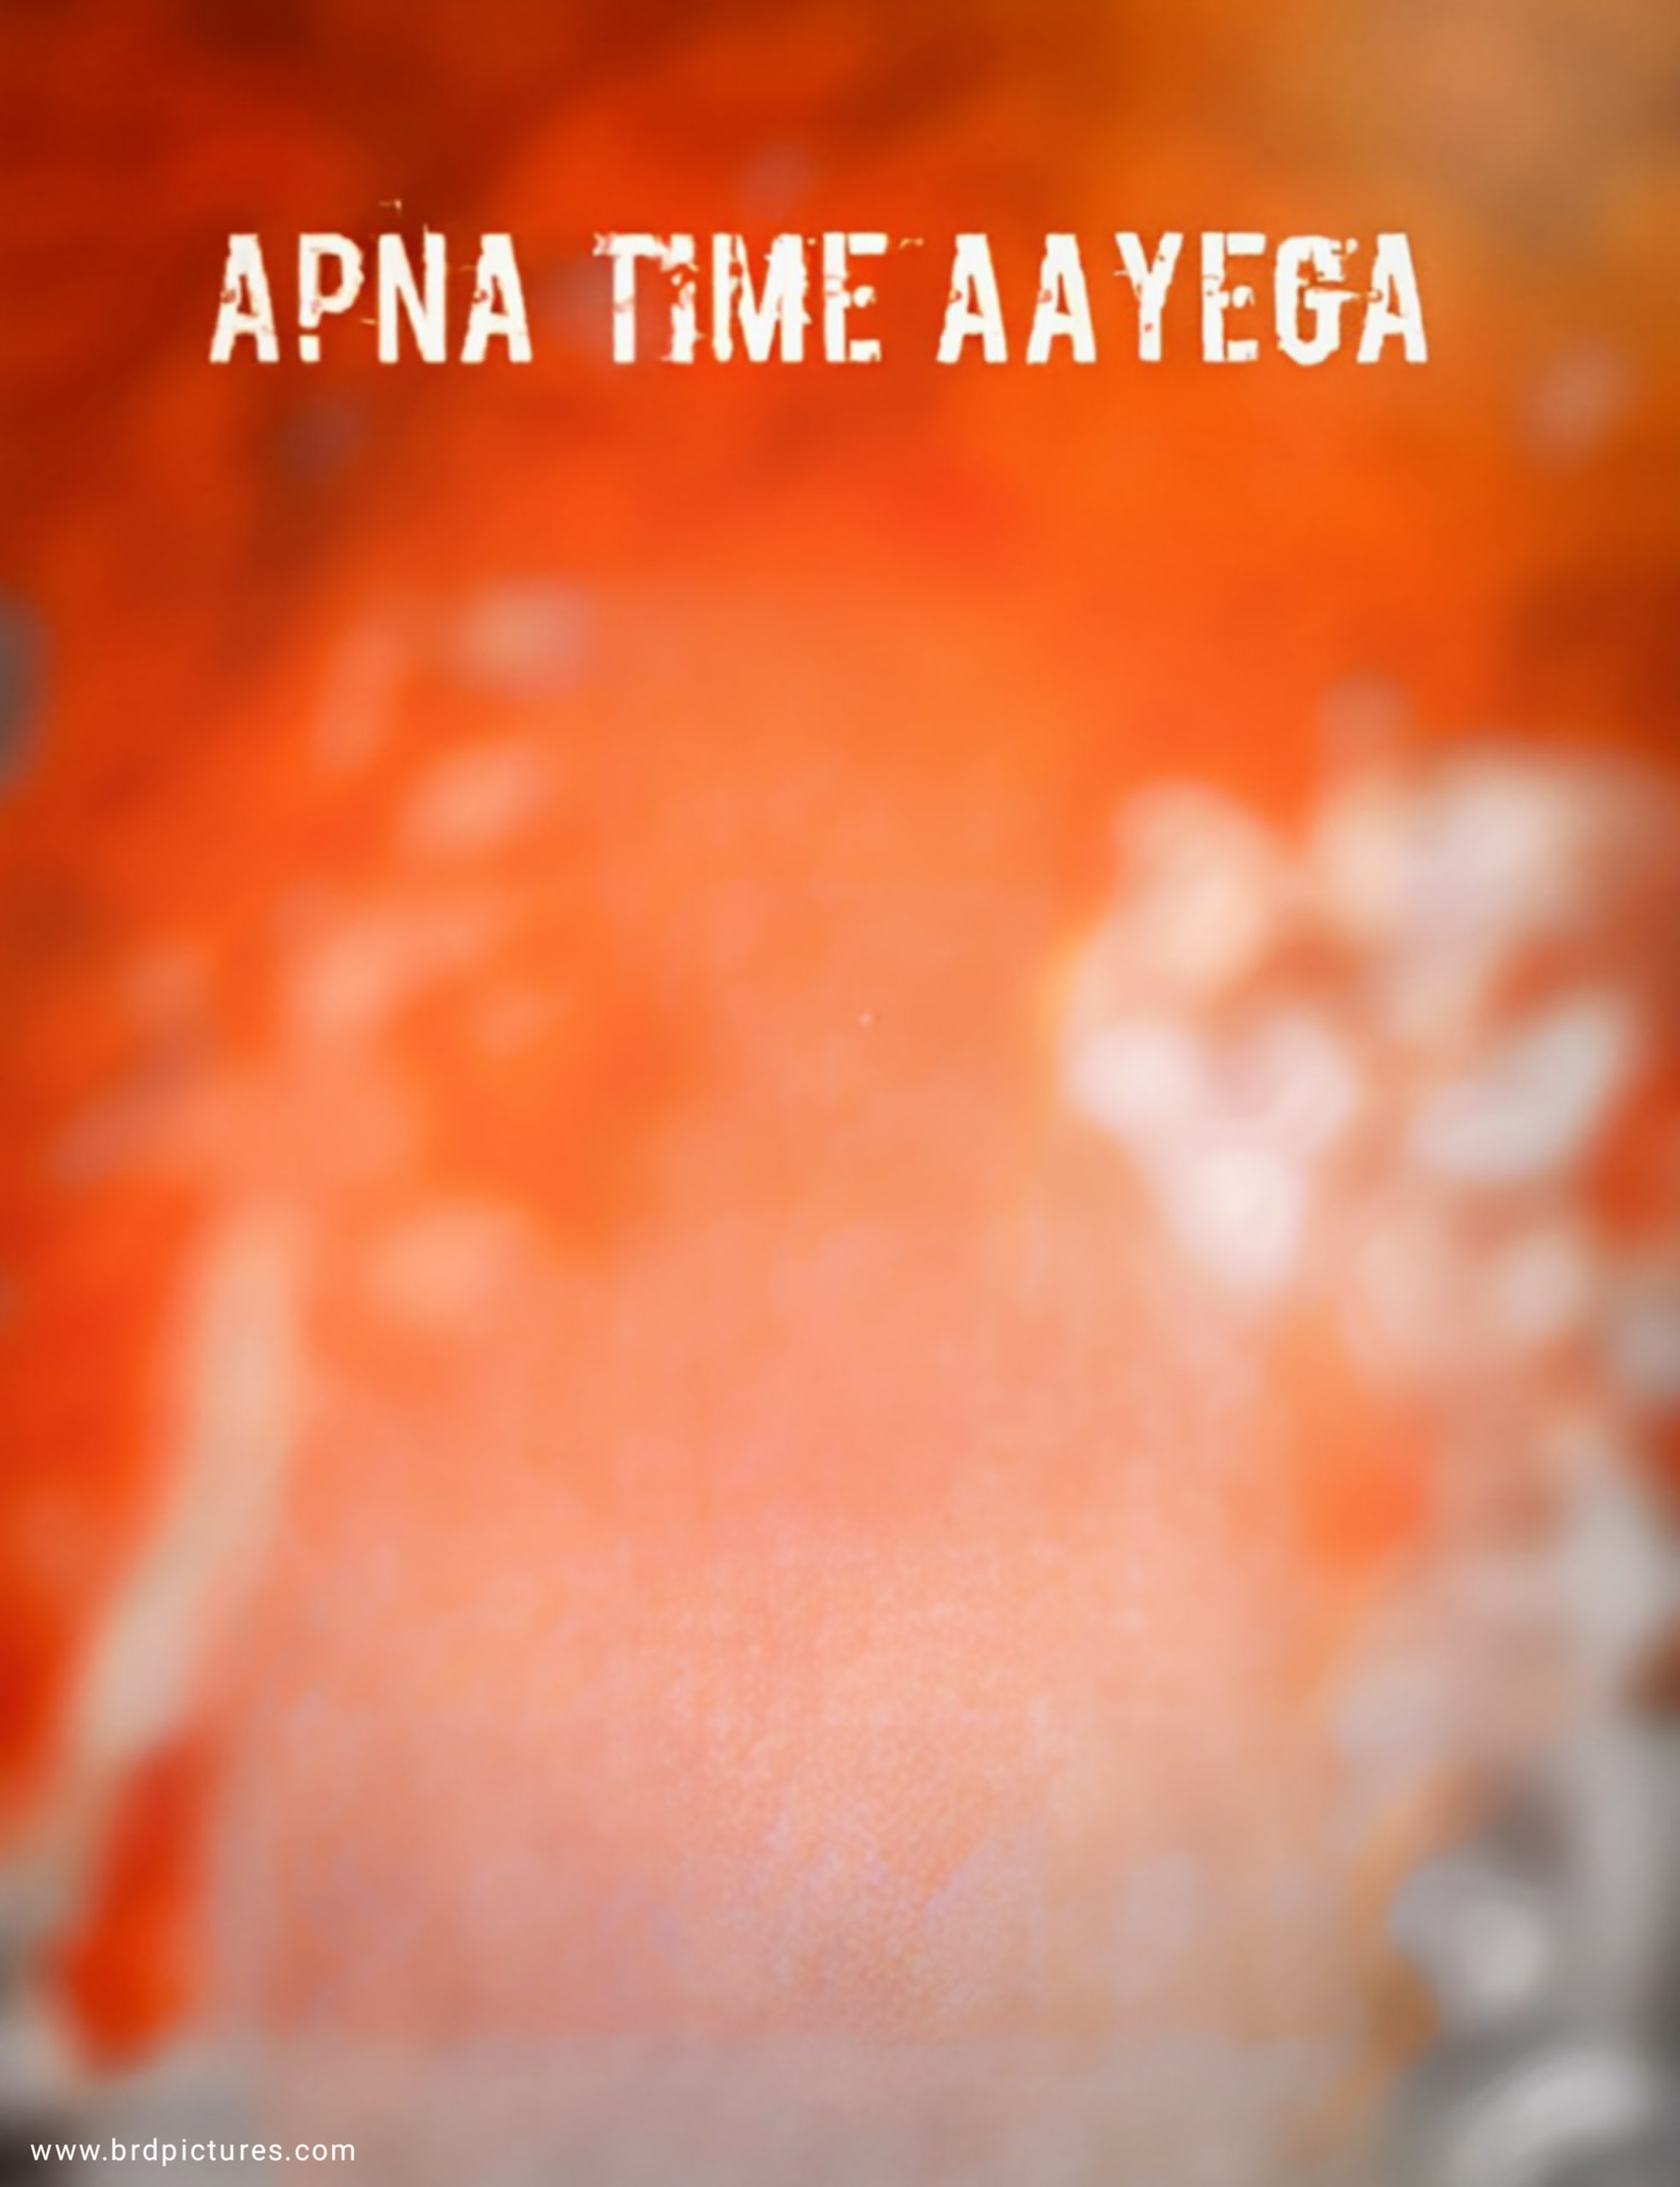 Apna Time Aayega CB Background Photo Editing 